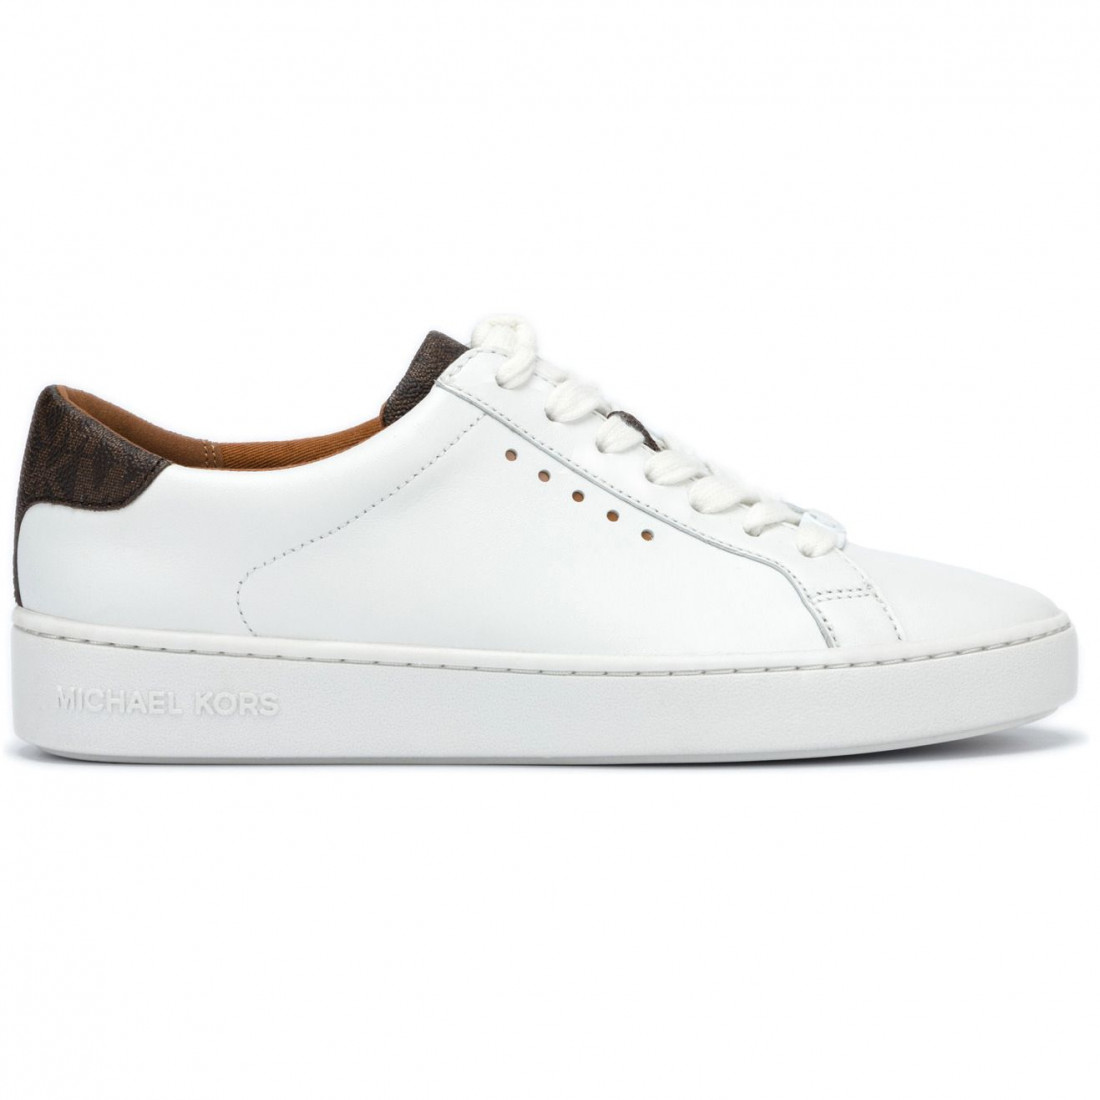 michael kors white leather slip on sneakers